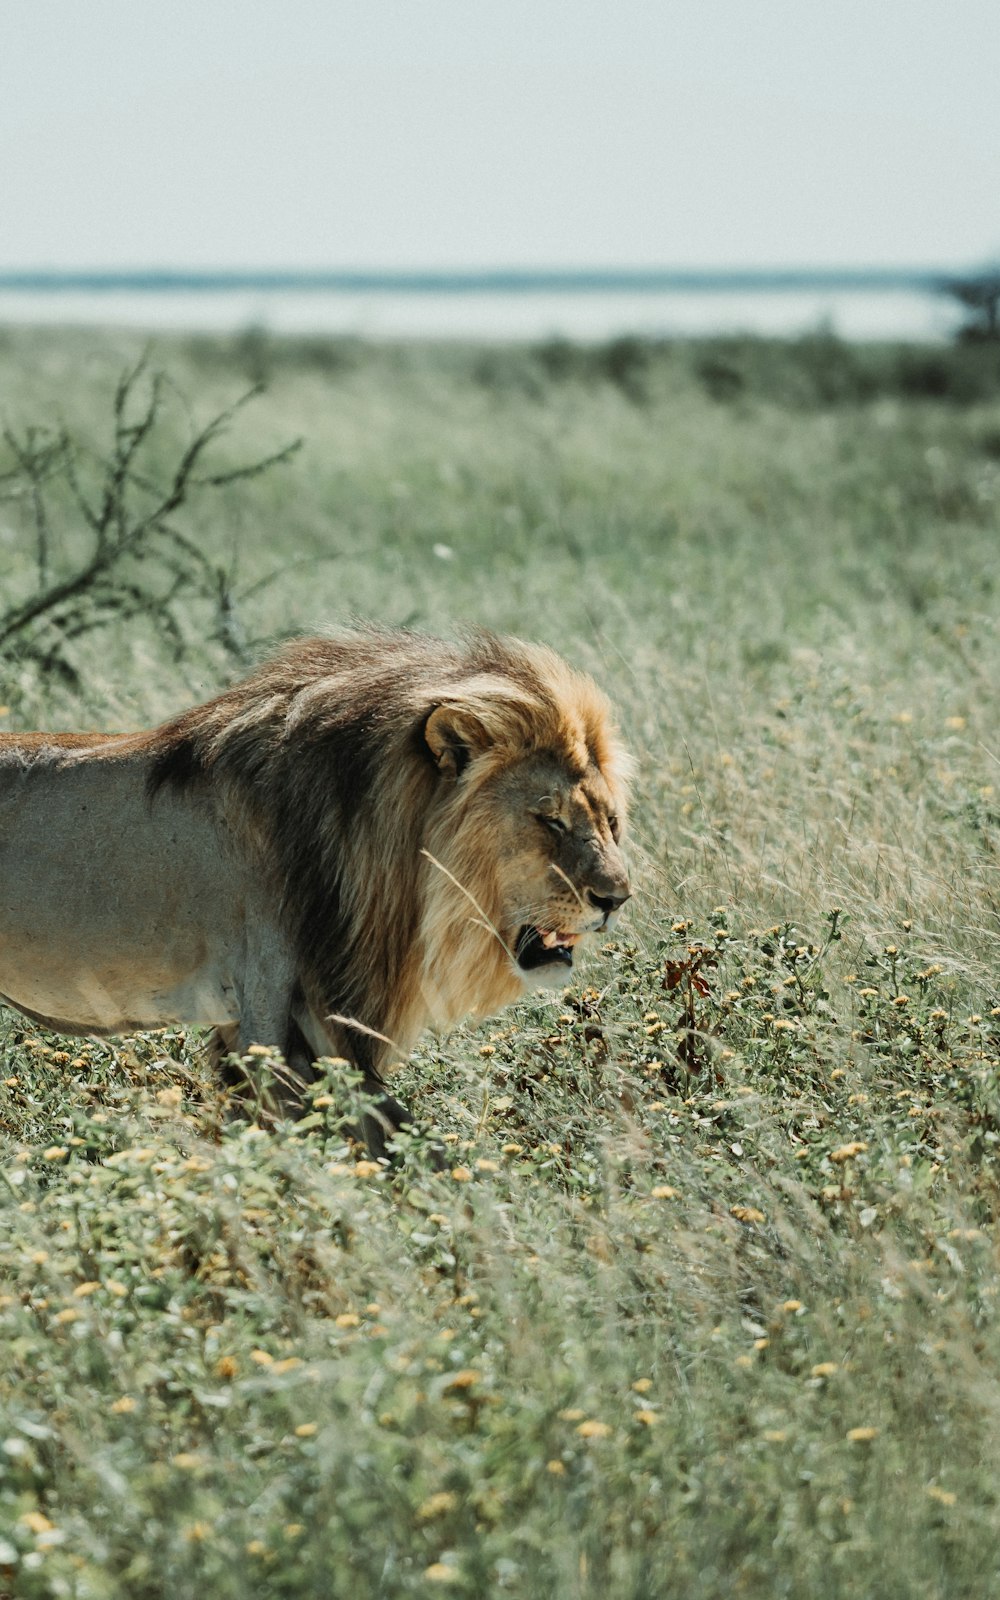 a lion lying in a grassy field